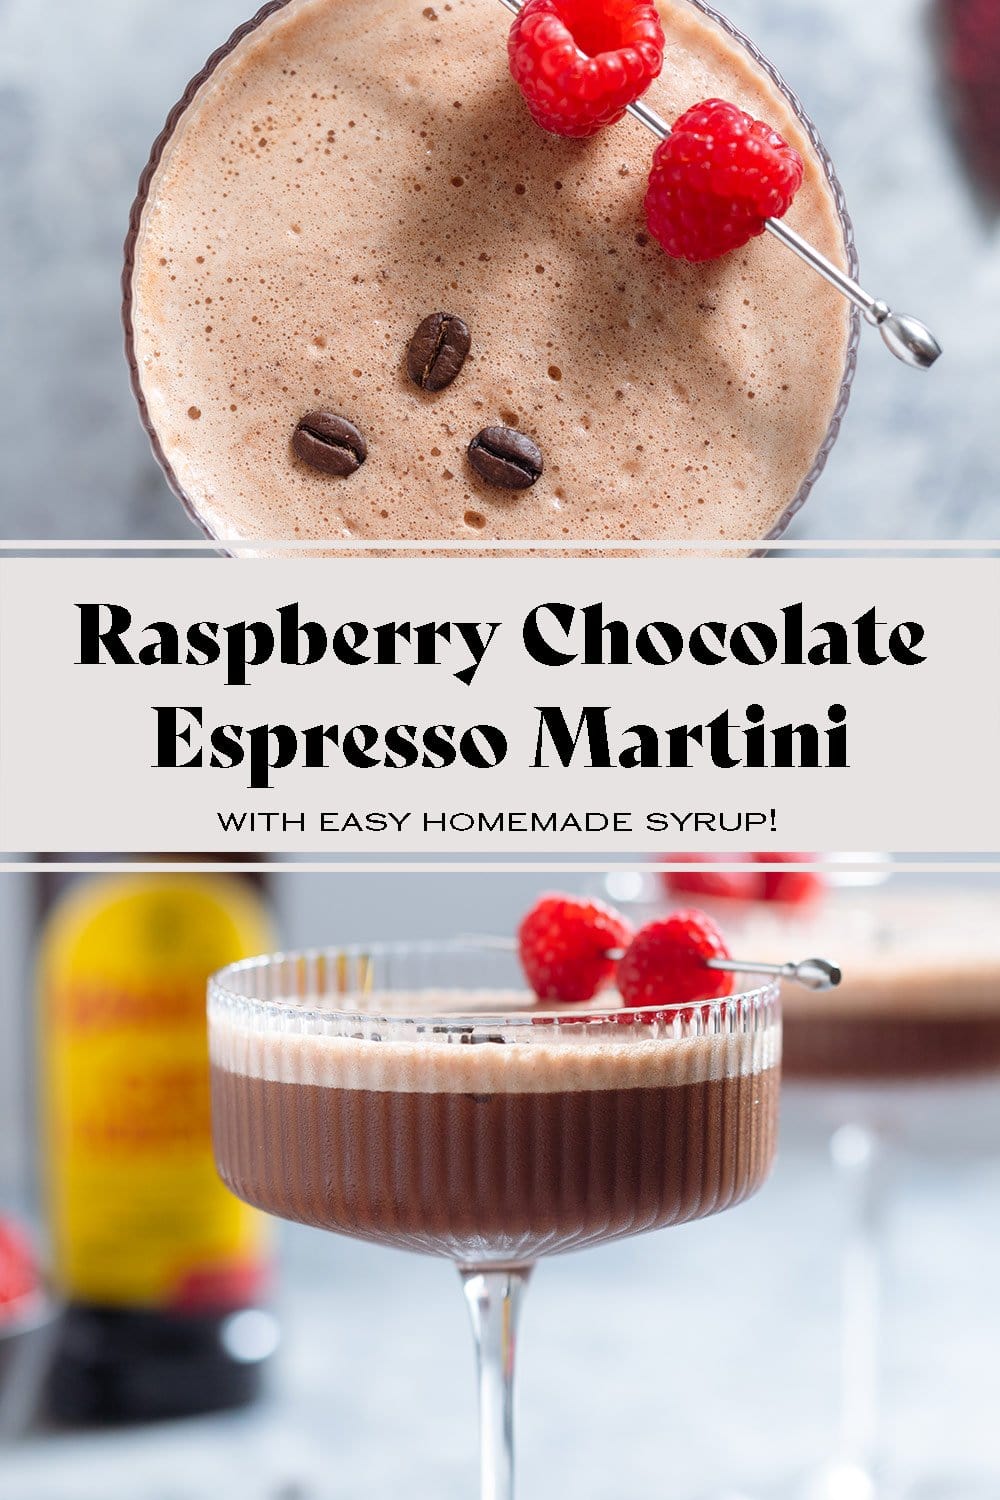 Chocolate Espresso Martini Recipe: How to Make It